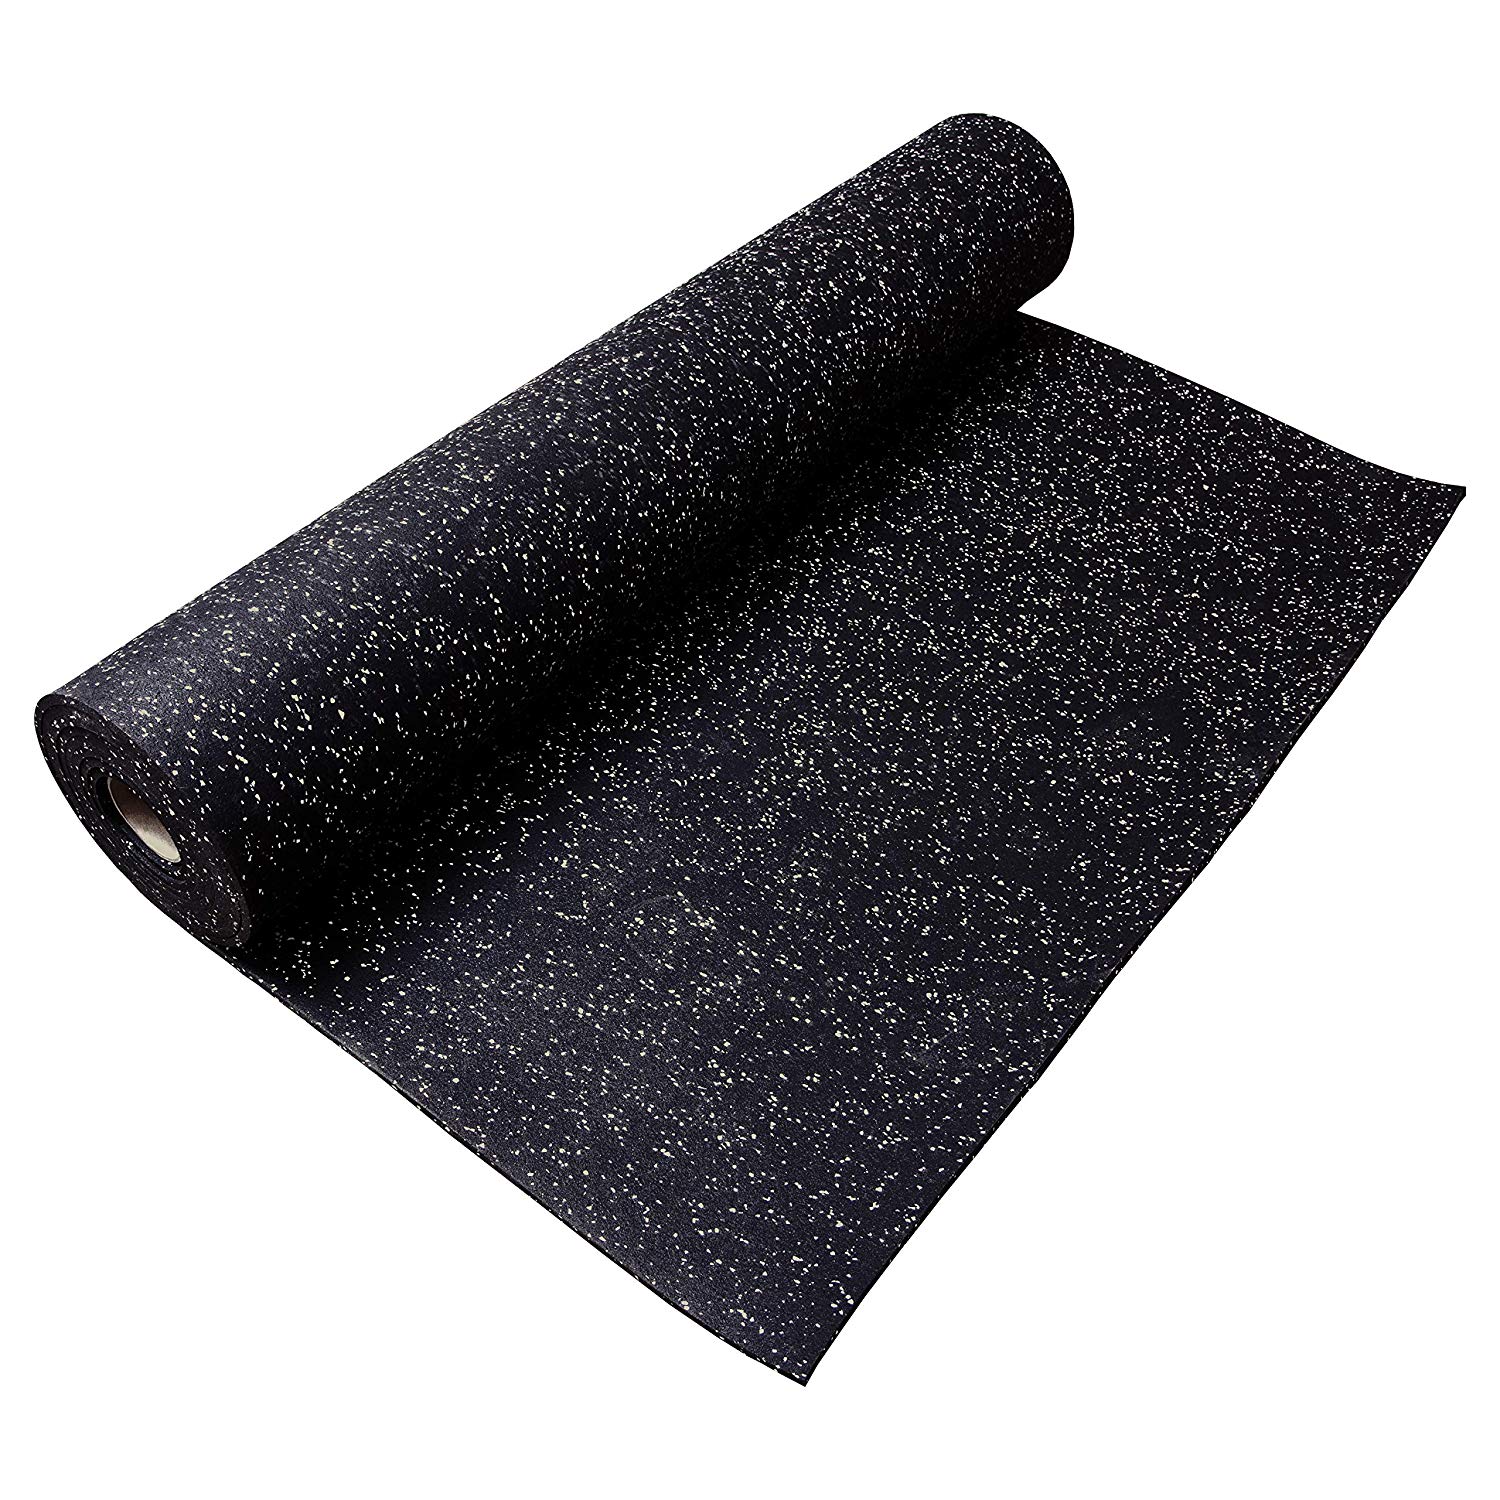 Crossfit EPDM Sparkles Rubber Roll Gym Floor Mat Buy Floor Mat, Rubber Floor, Rubber Floor Mat